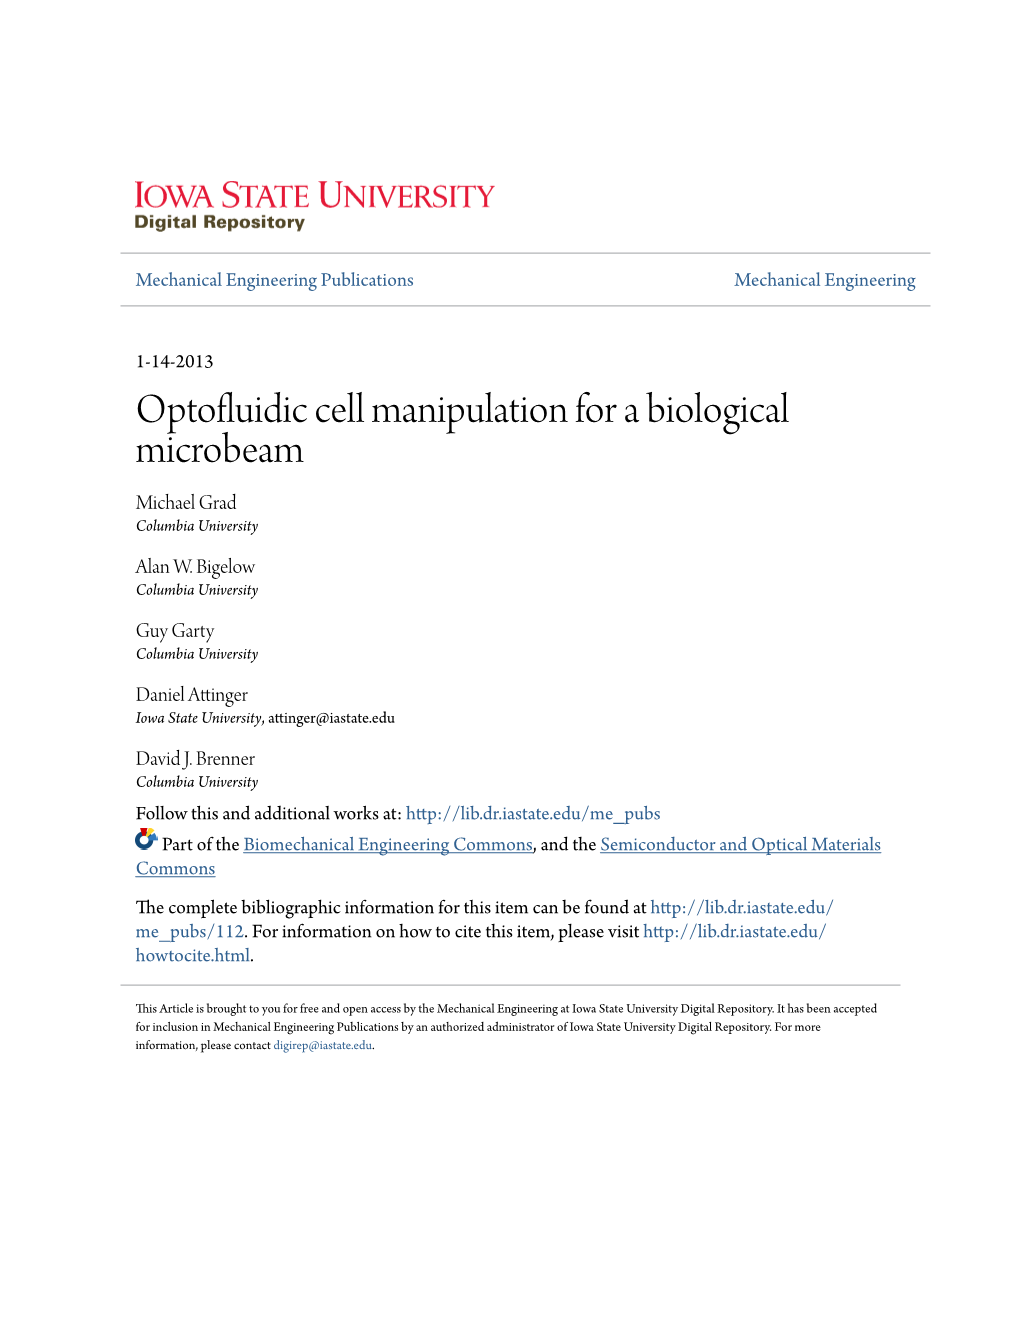 Optofluidic Cell Manipulation for a Biological Microbeam Michael Grad Columbia University